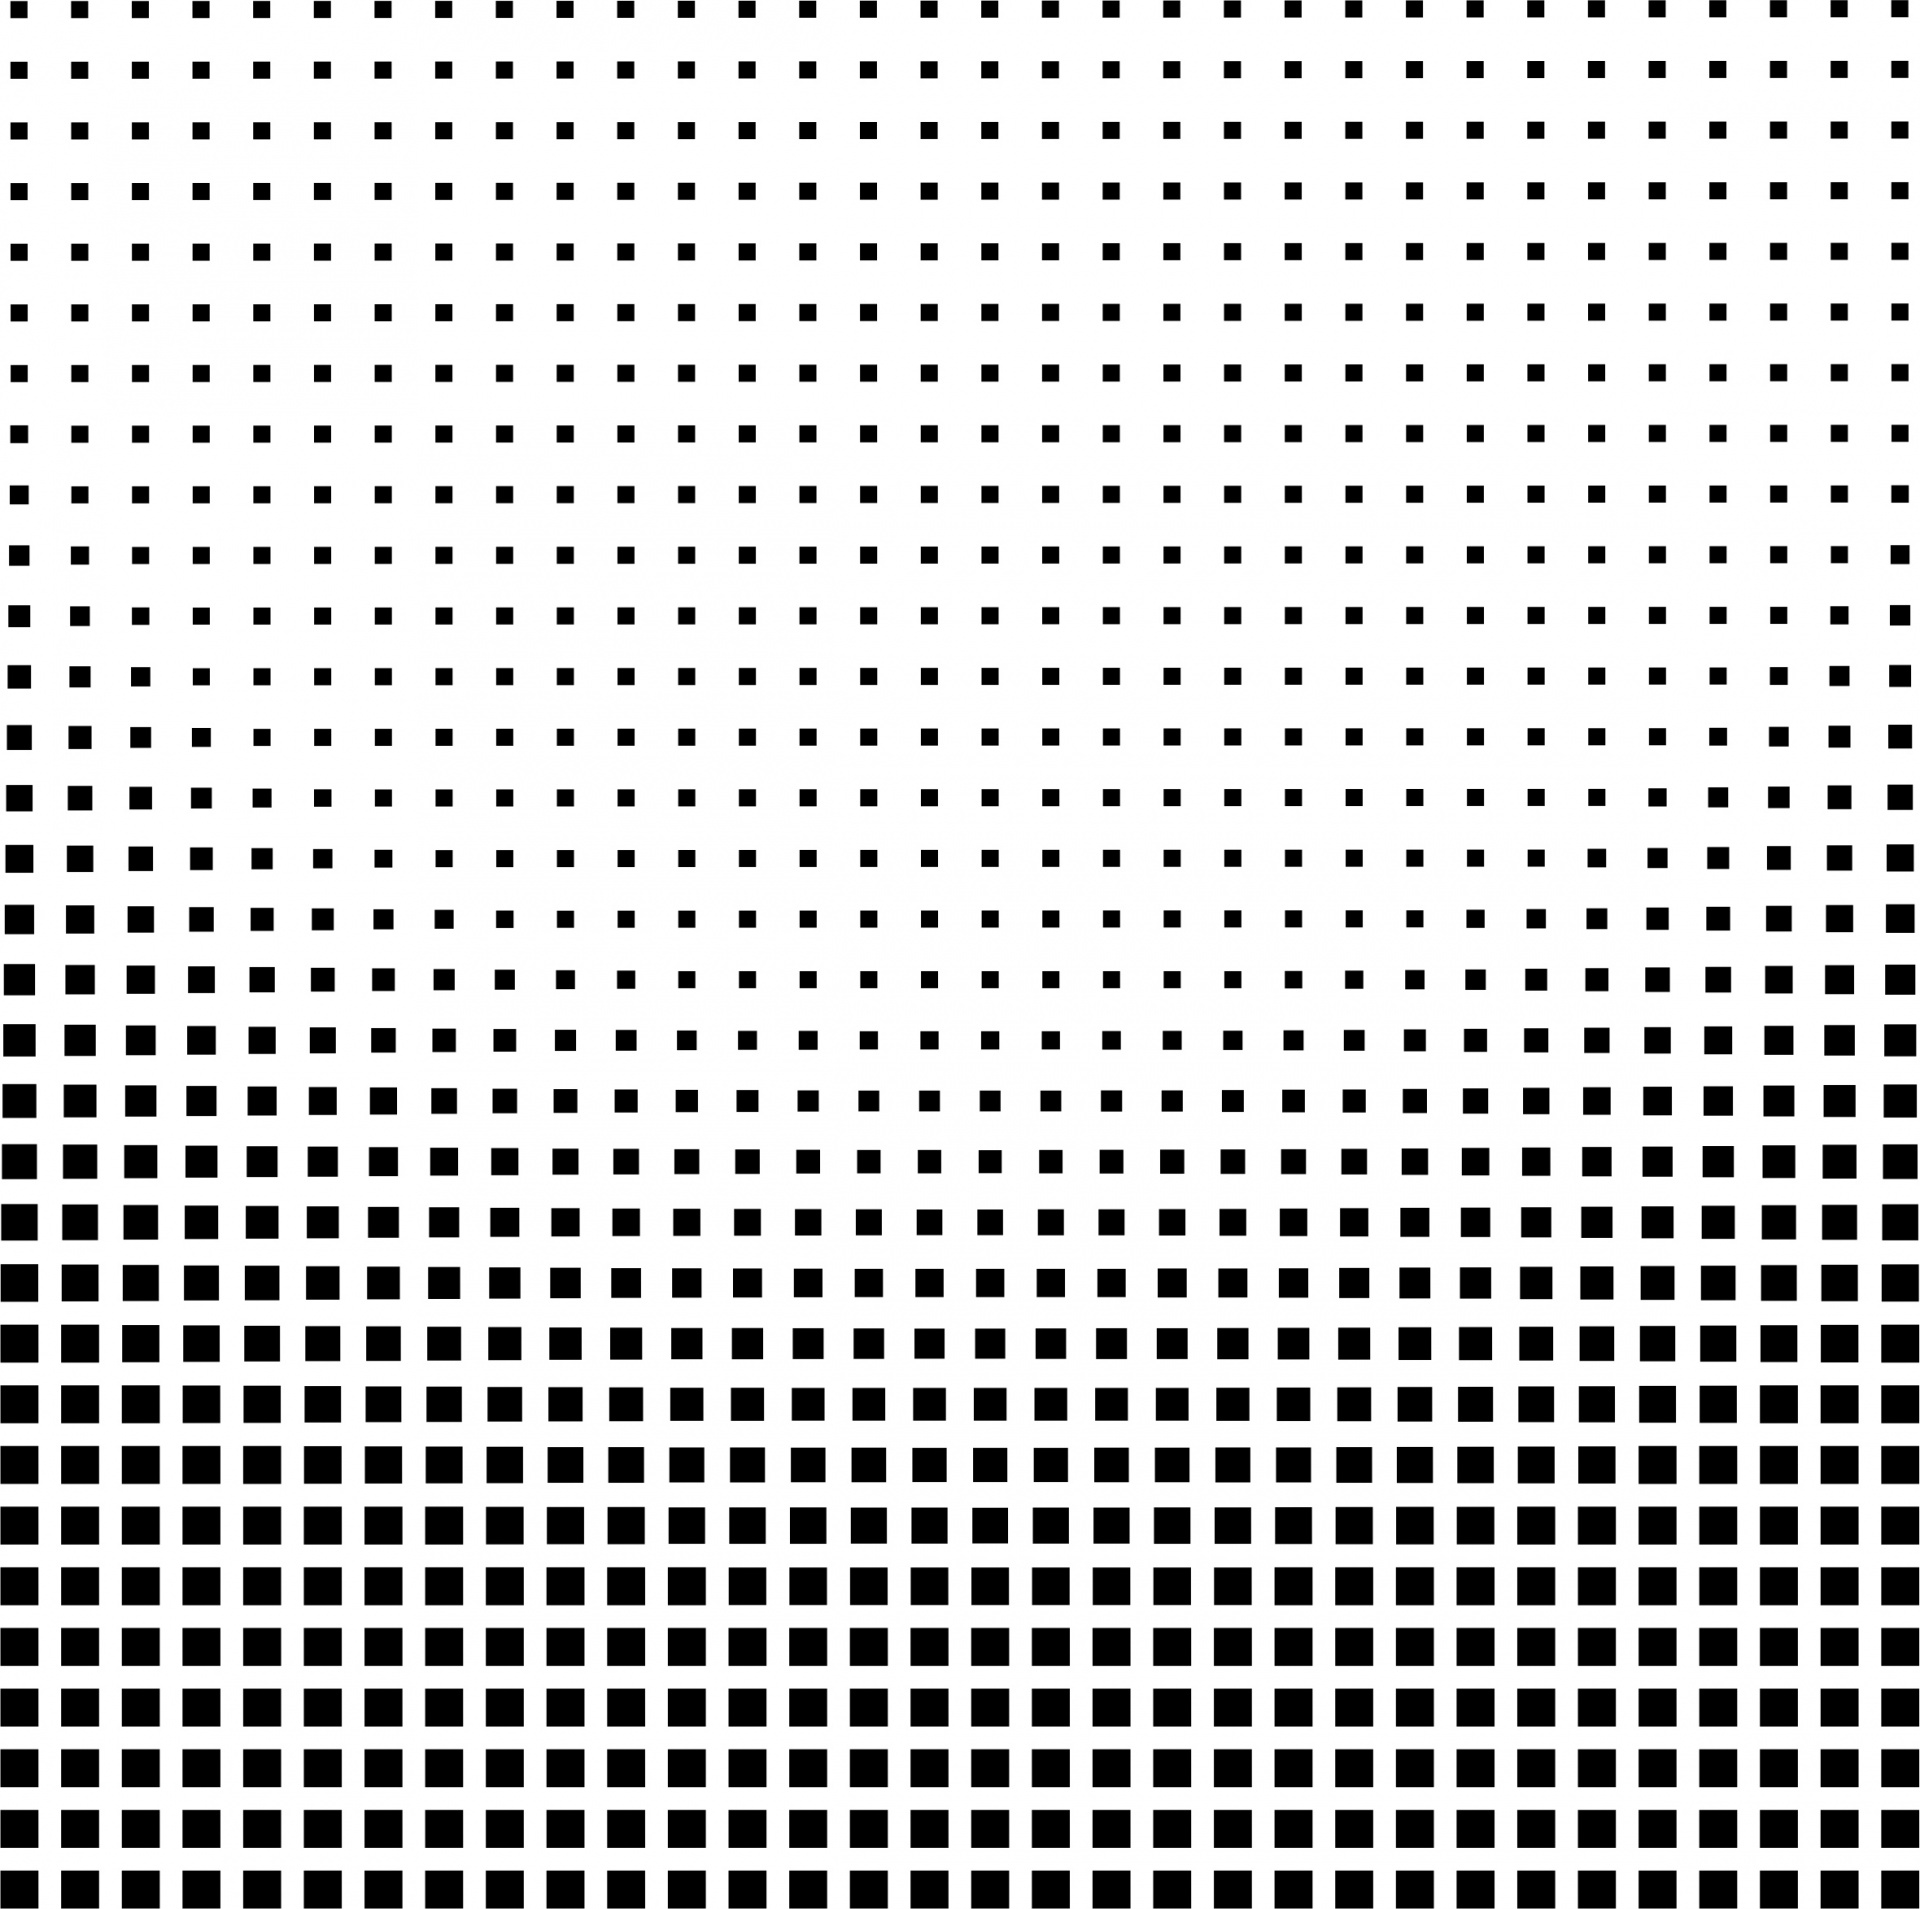 pattern texture dots free photo